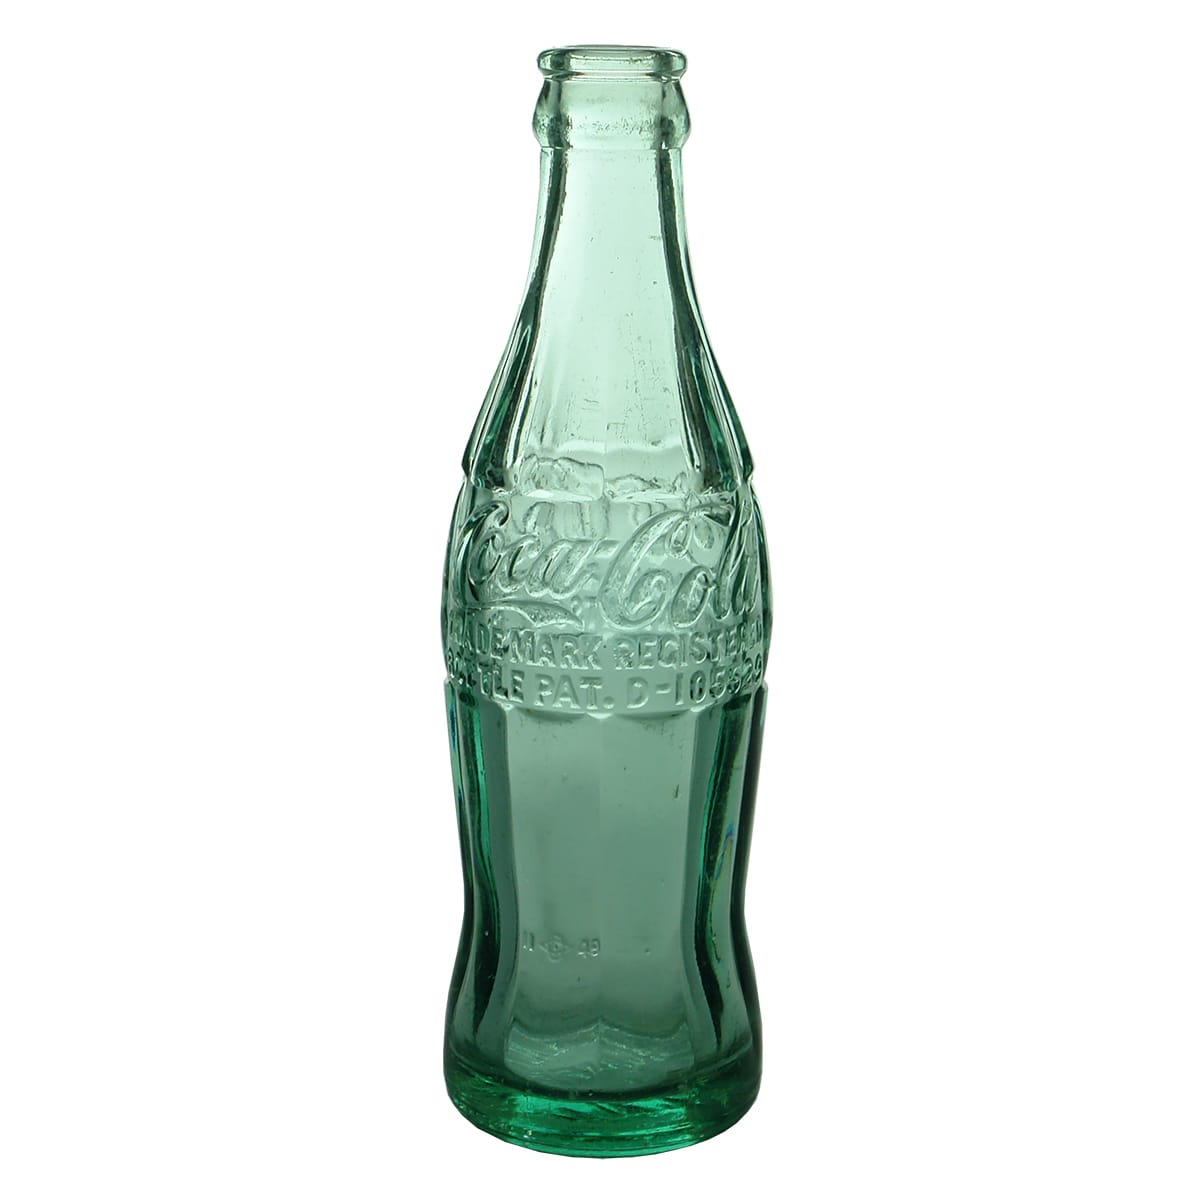 Crown Seal. Coca Cola, San Francisco. Aqua. 6 oz. (United States)